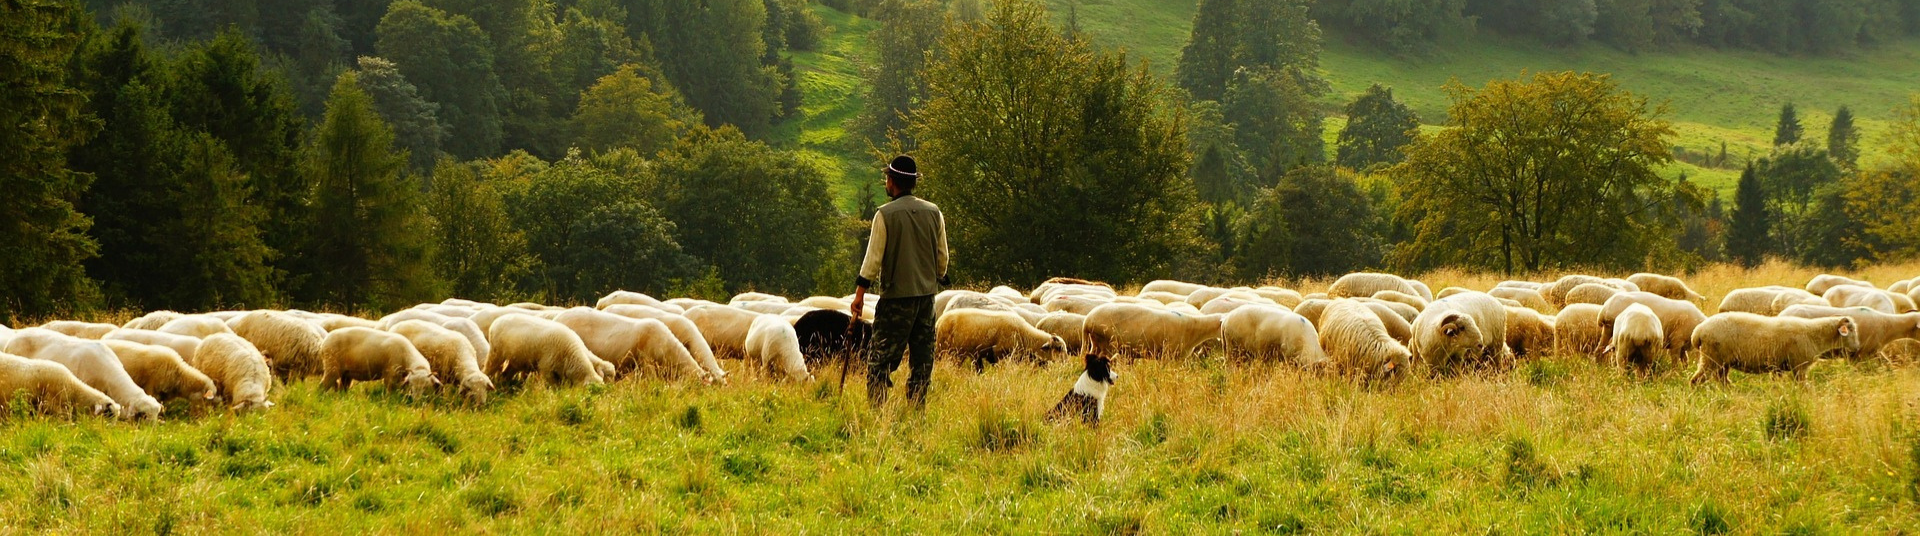 Livestock in organic farming